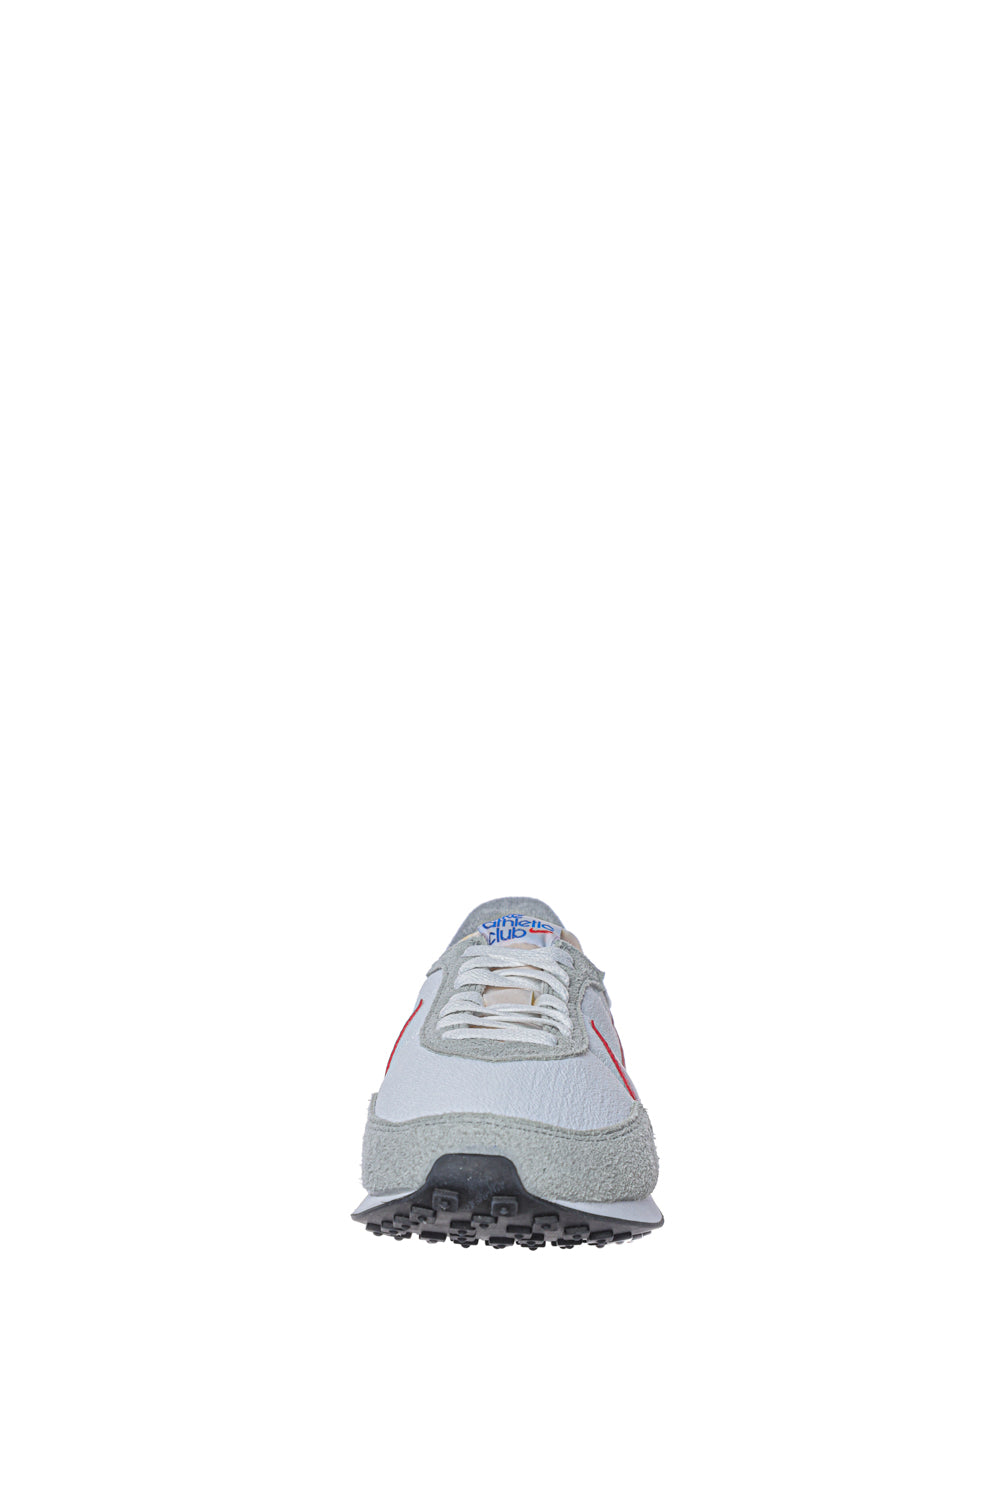 Pantofi sport Nike WAFFLE TRAINER 2 ATH